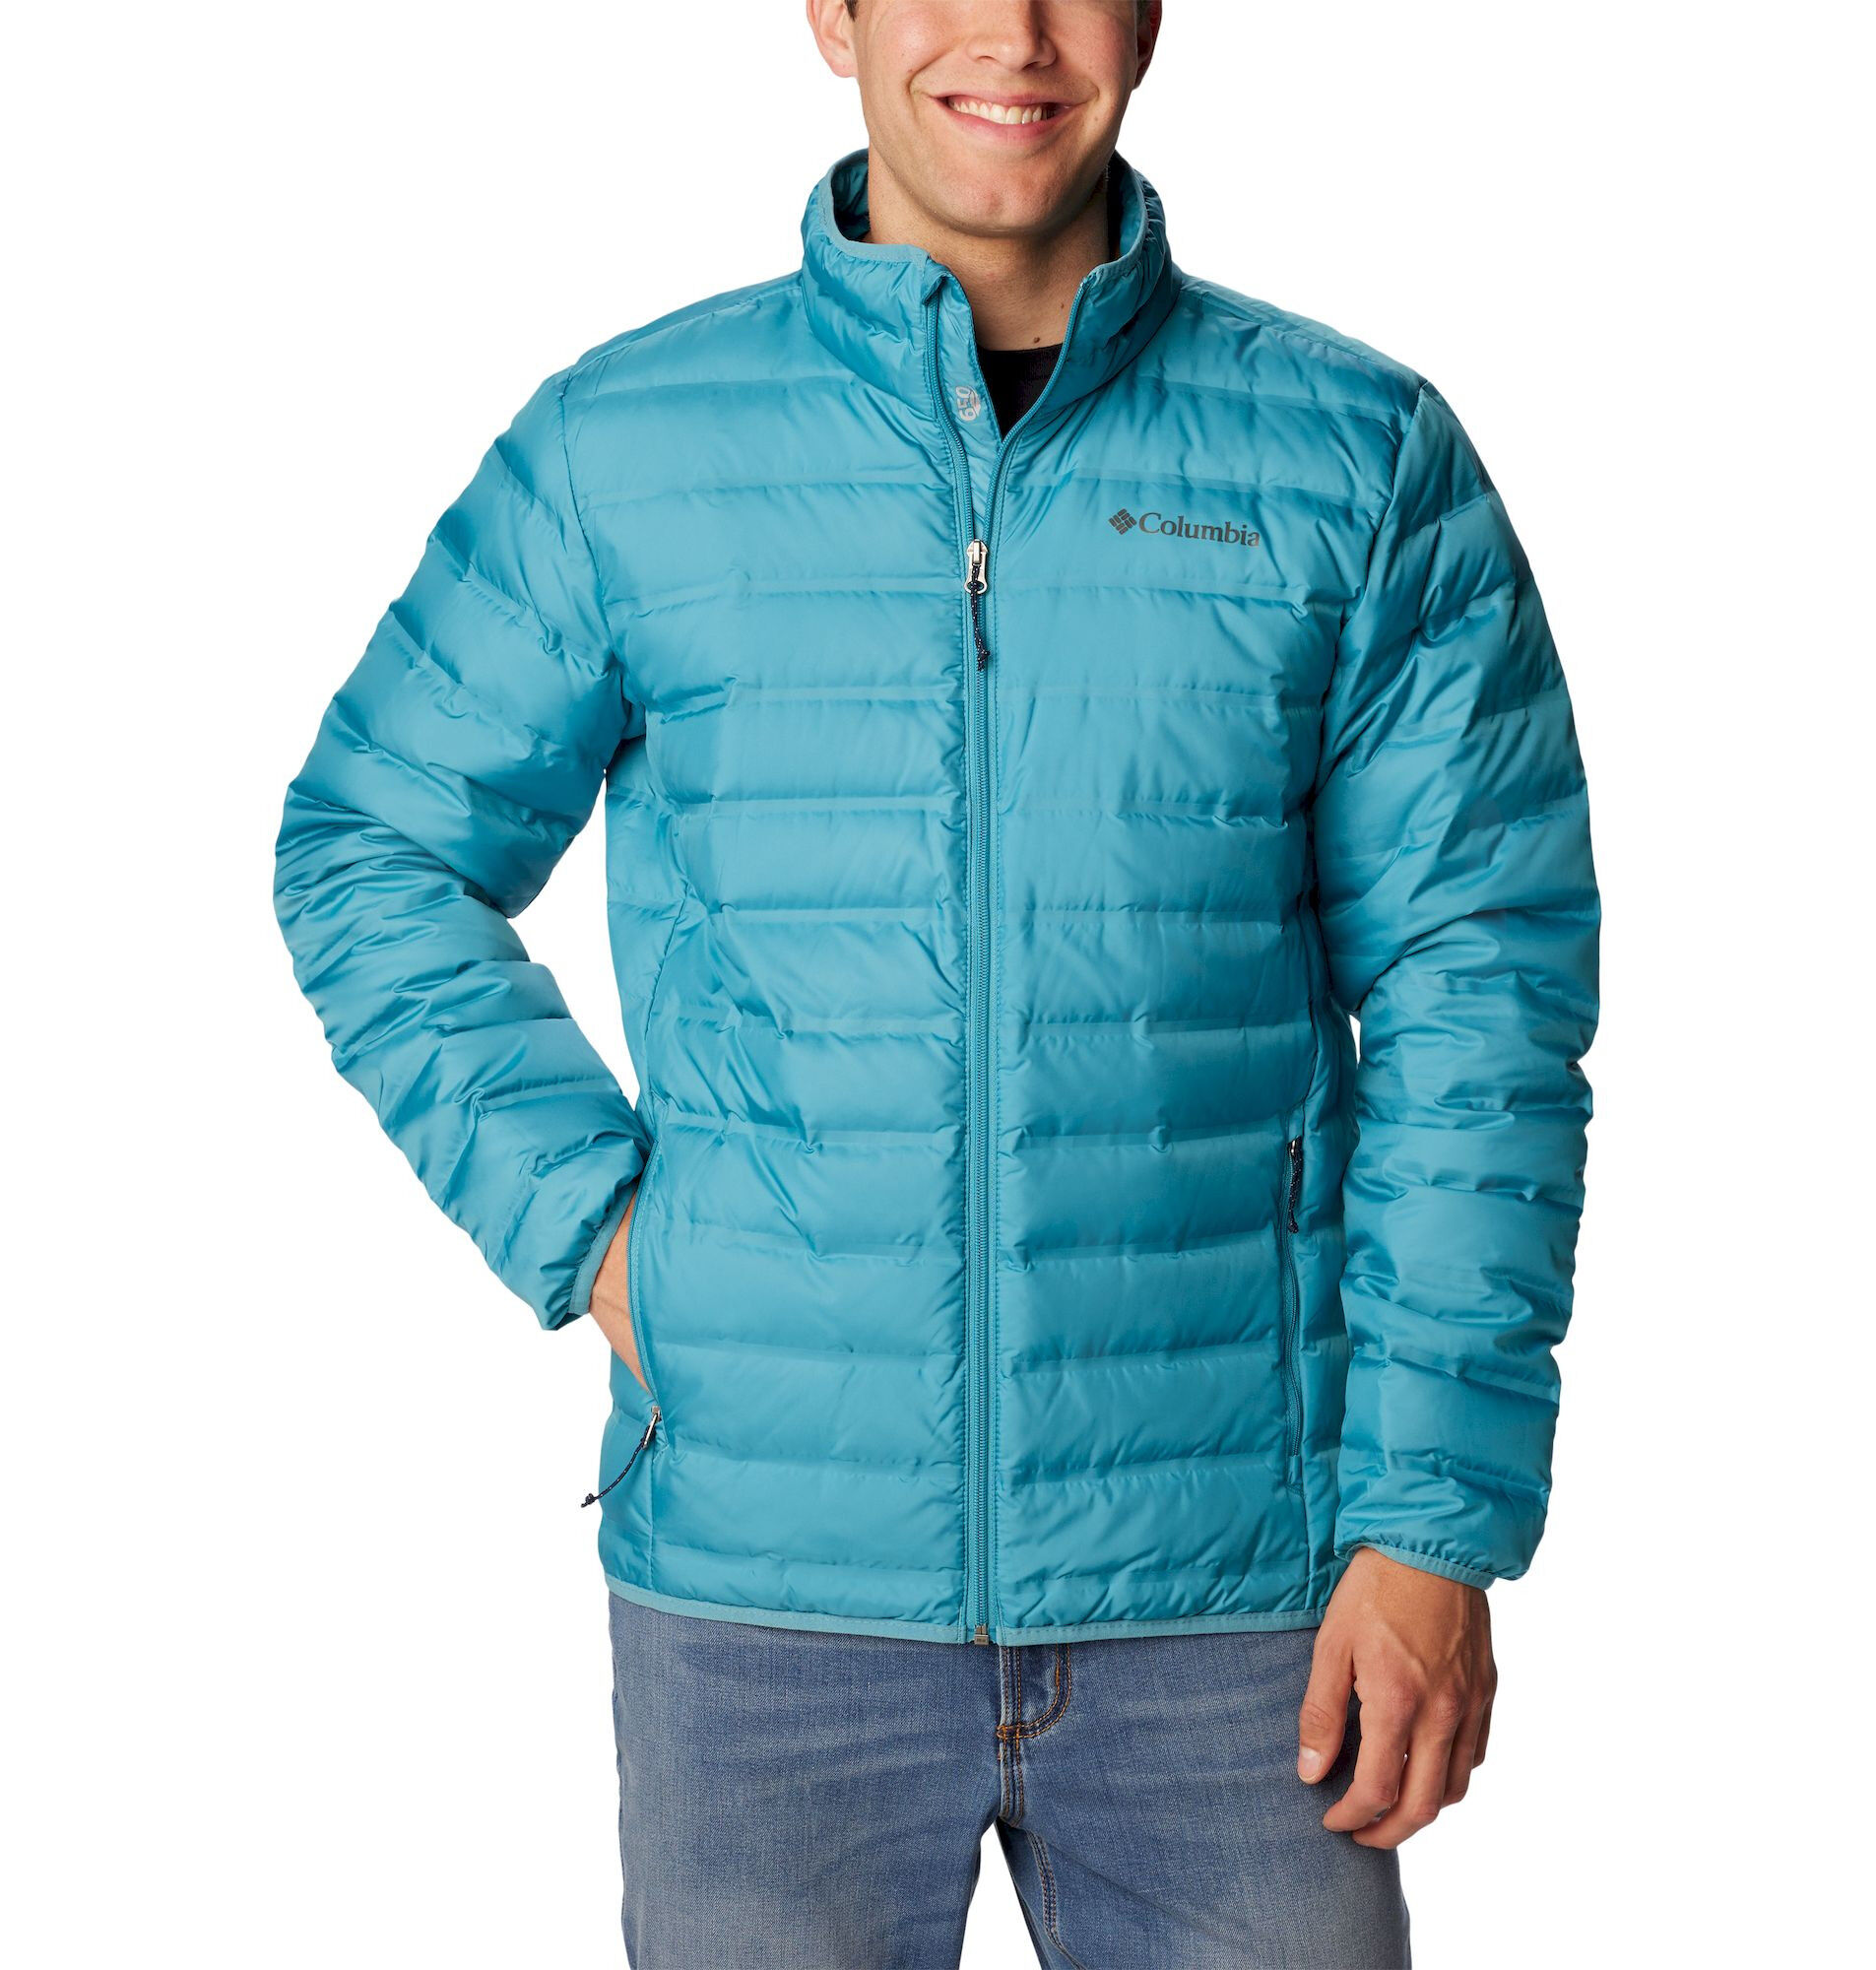 Columbia Lake 22 Hybrid Down Jacket - Insulated jacket - Men's